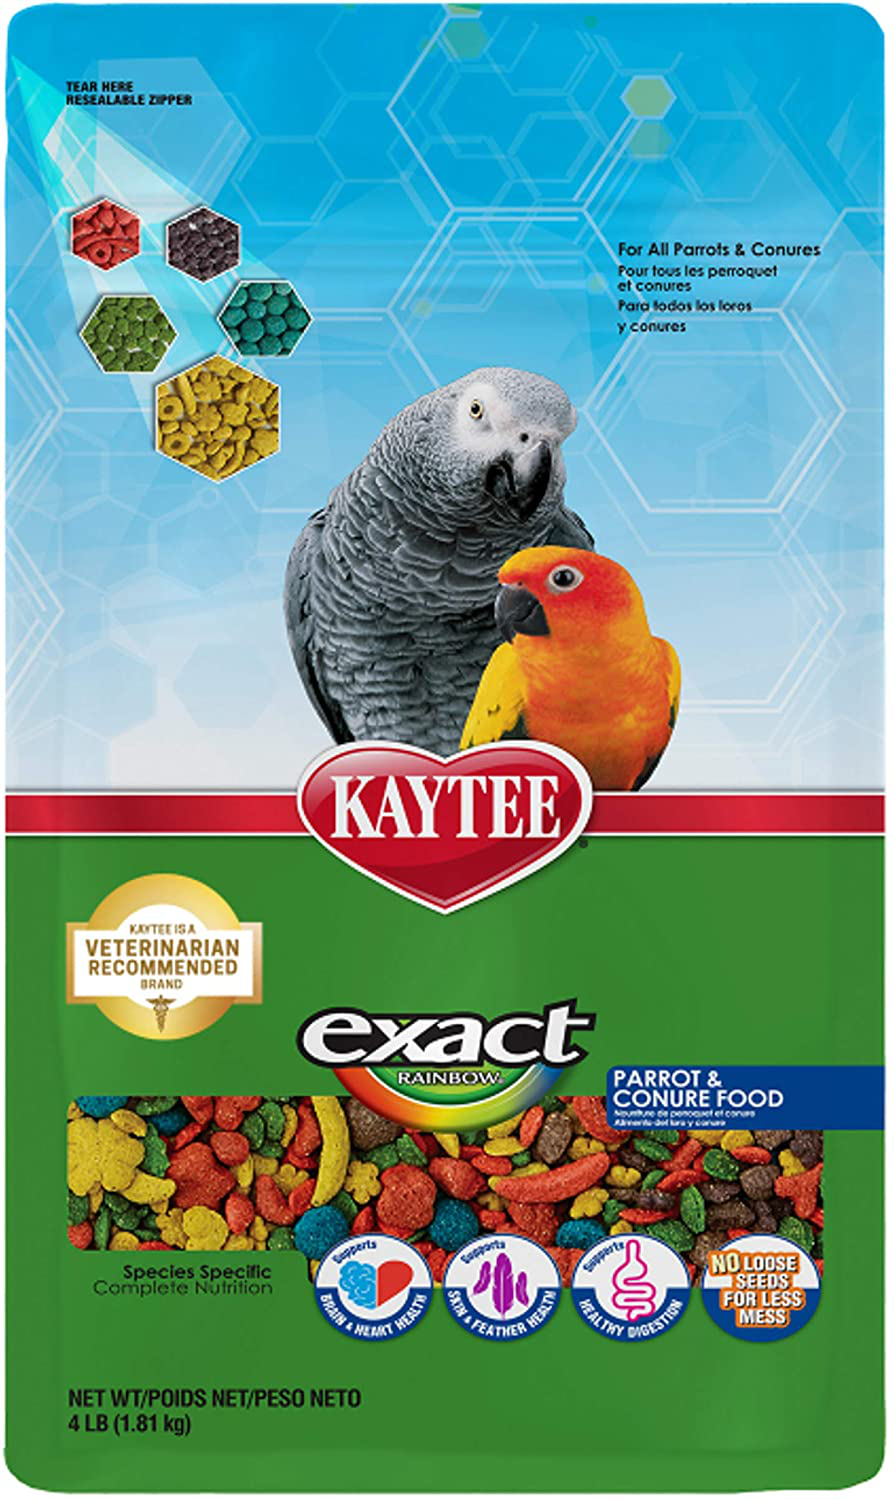 Kaytee Exact Rainbow Parrot & Conure Food